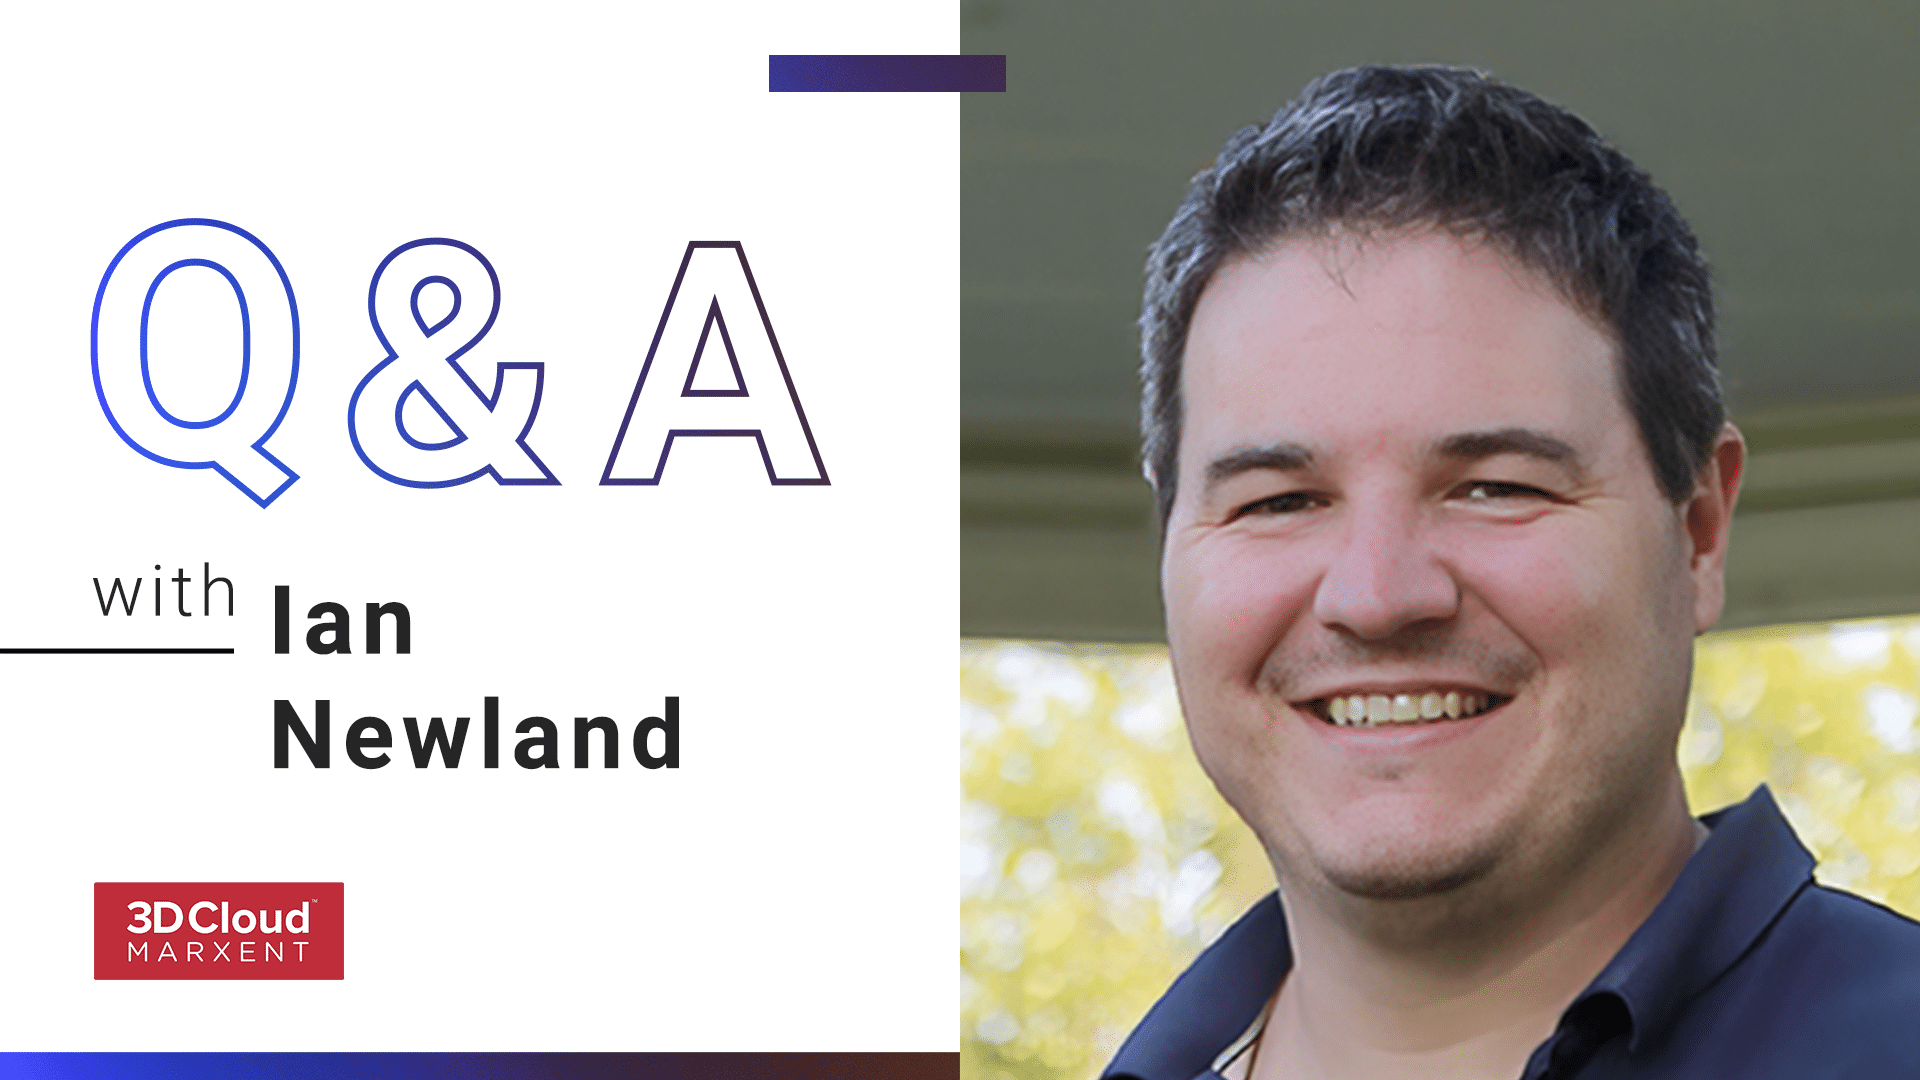 Employee Q&A with Ian Newland